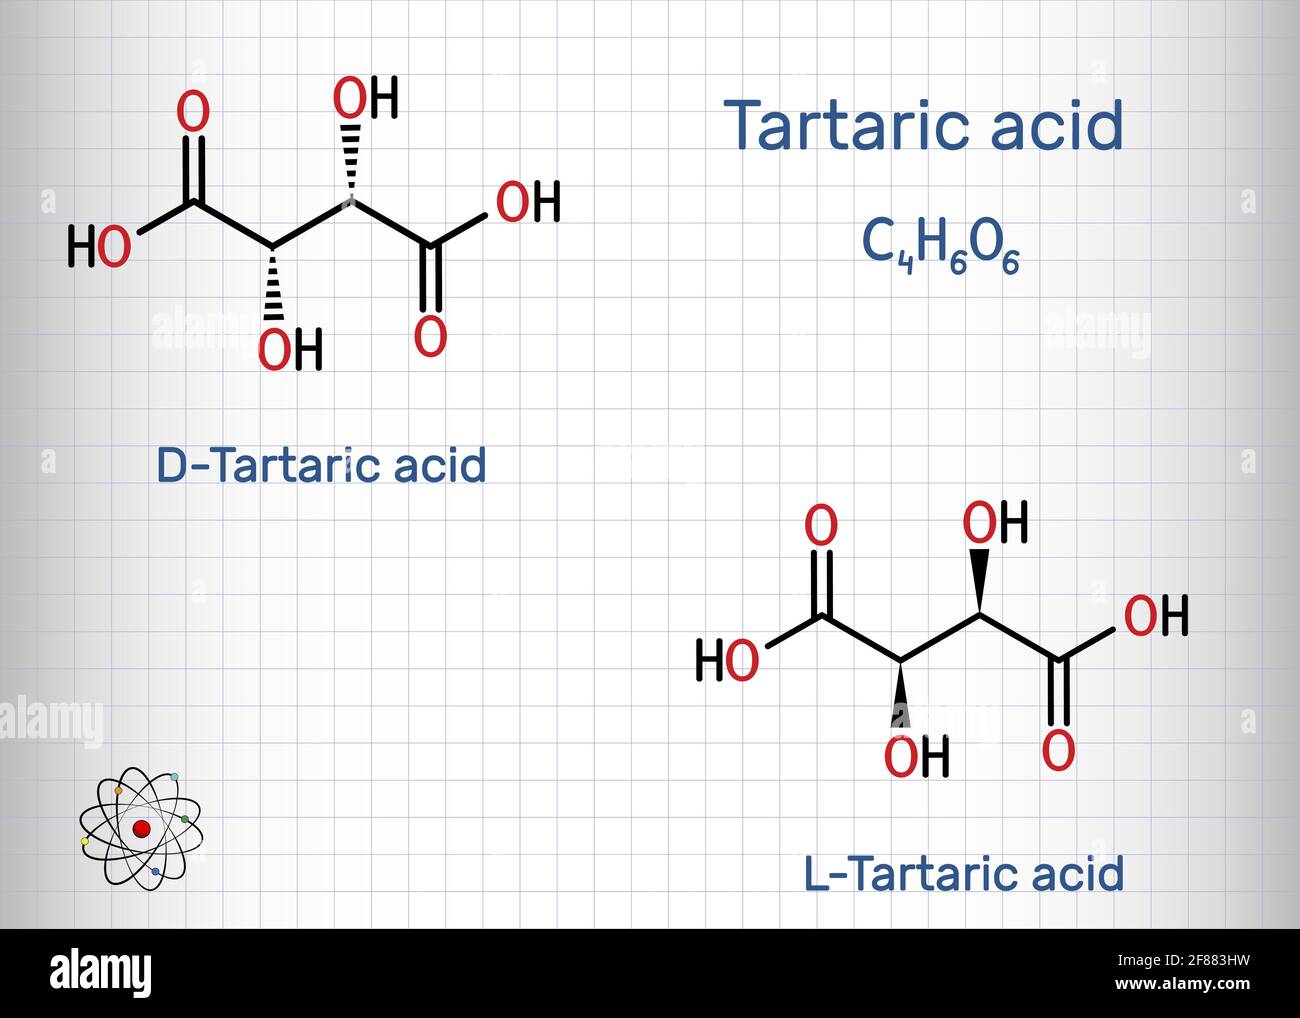 https://c8.alamy.com/compit/2f883hw/molecola-di-acido-tartarico-d-tartarico-l-tartarico-destartarico-levotartarico-e-antiossidante-e334-si-presenta-in-uve-banane-tamarindi-cir-2f883hw.jpg